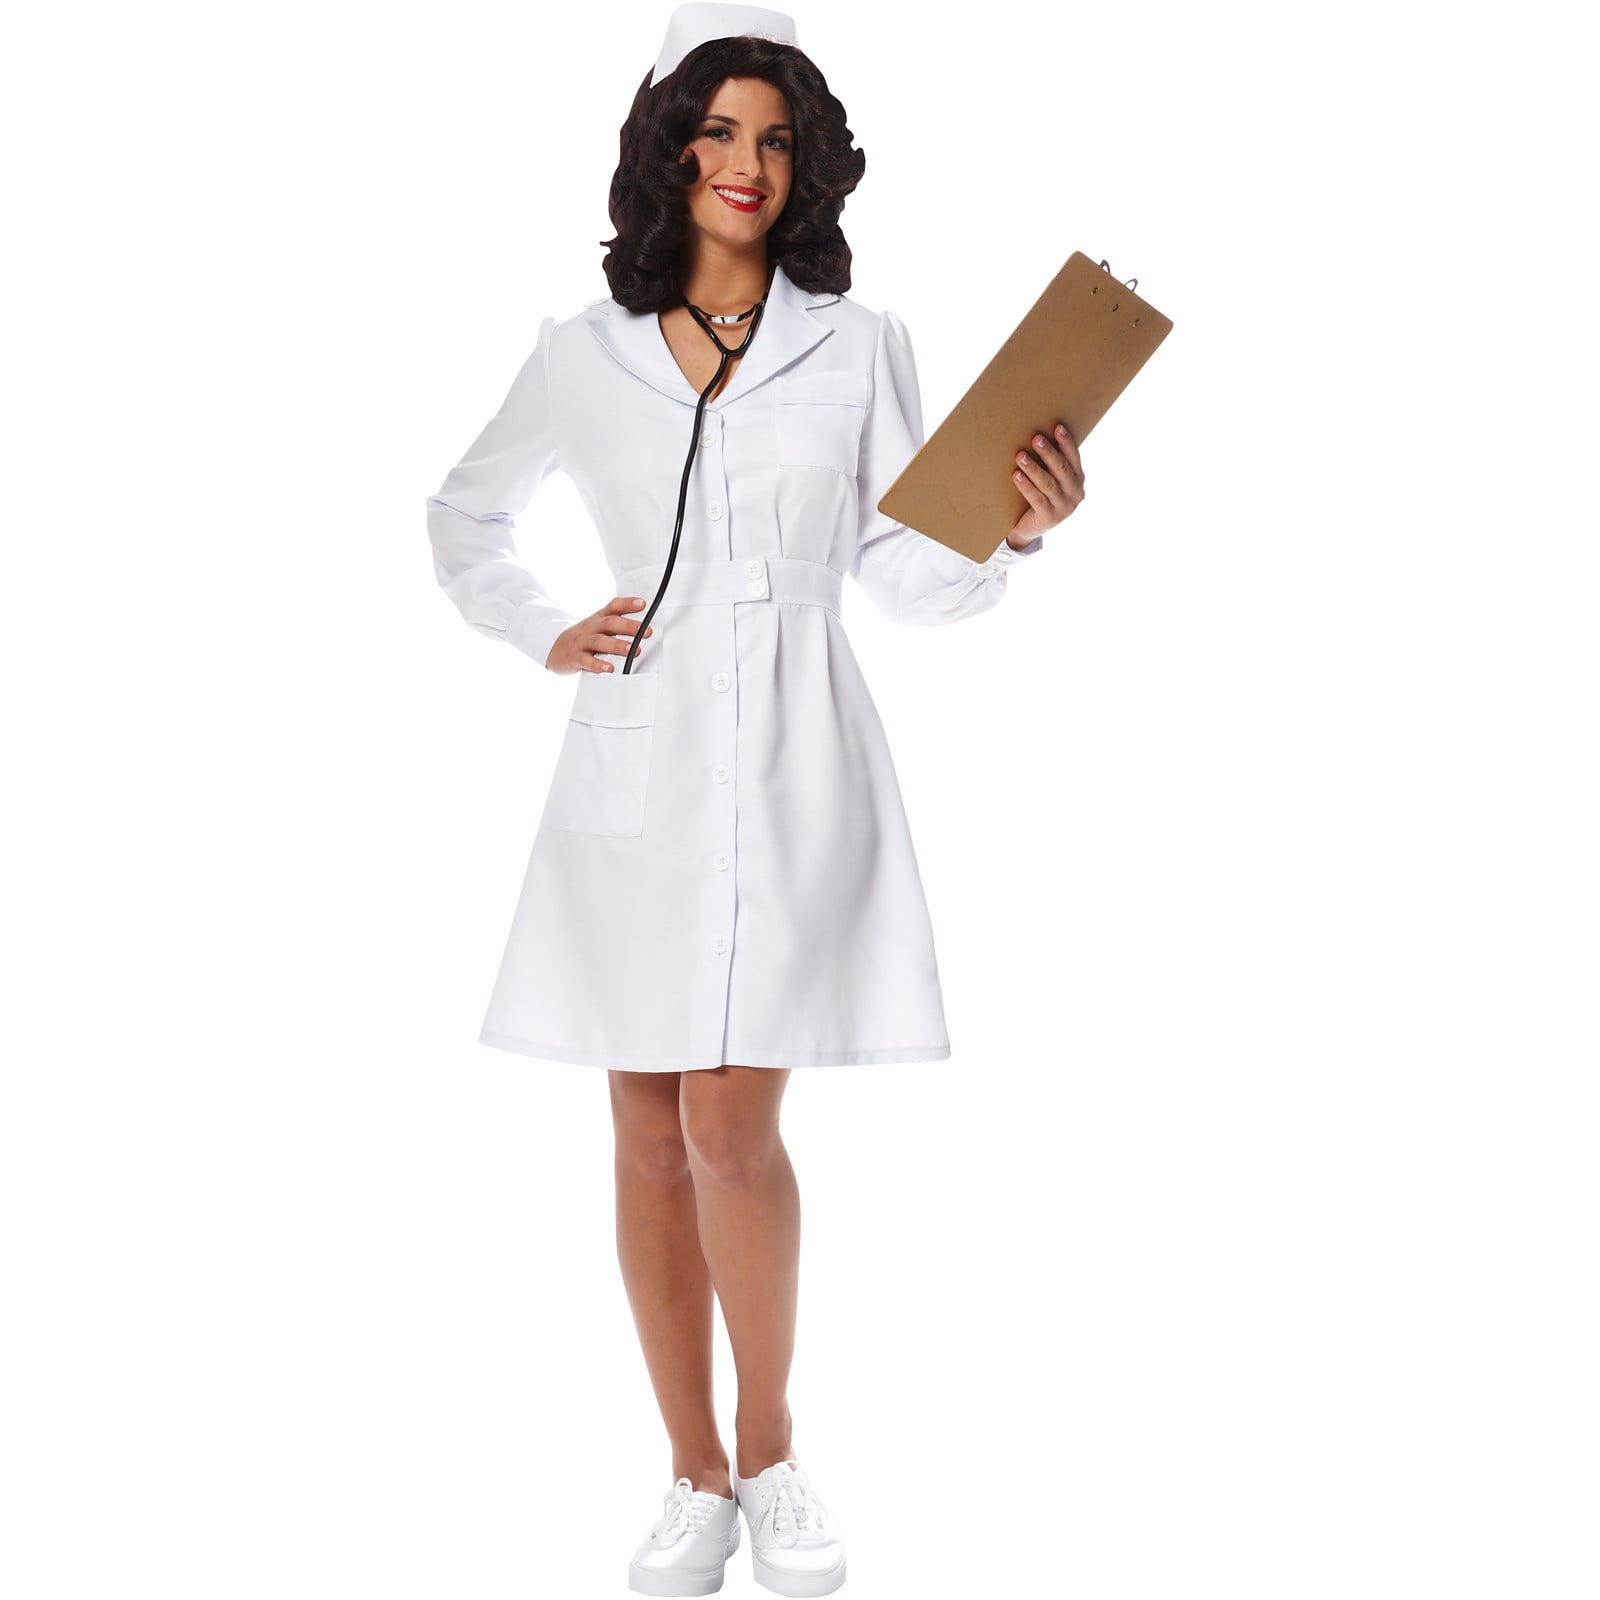 Medical Scrub HALLOWEEN DRESS UP COSTUME Uniform Nurse VET Doctor BATS PUMP...